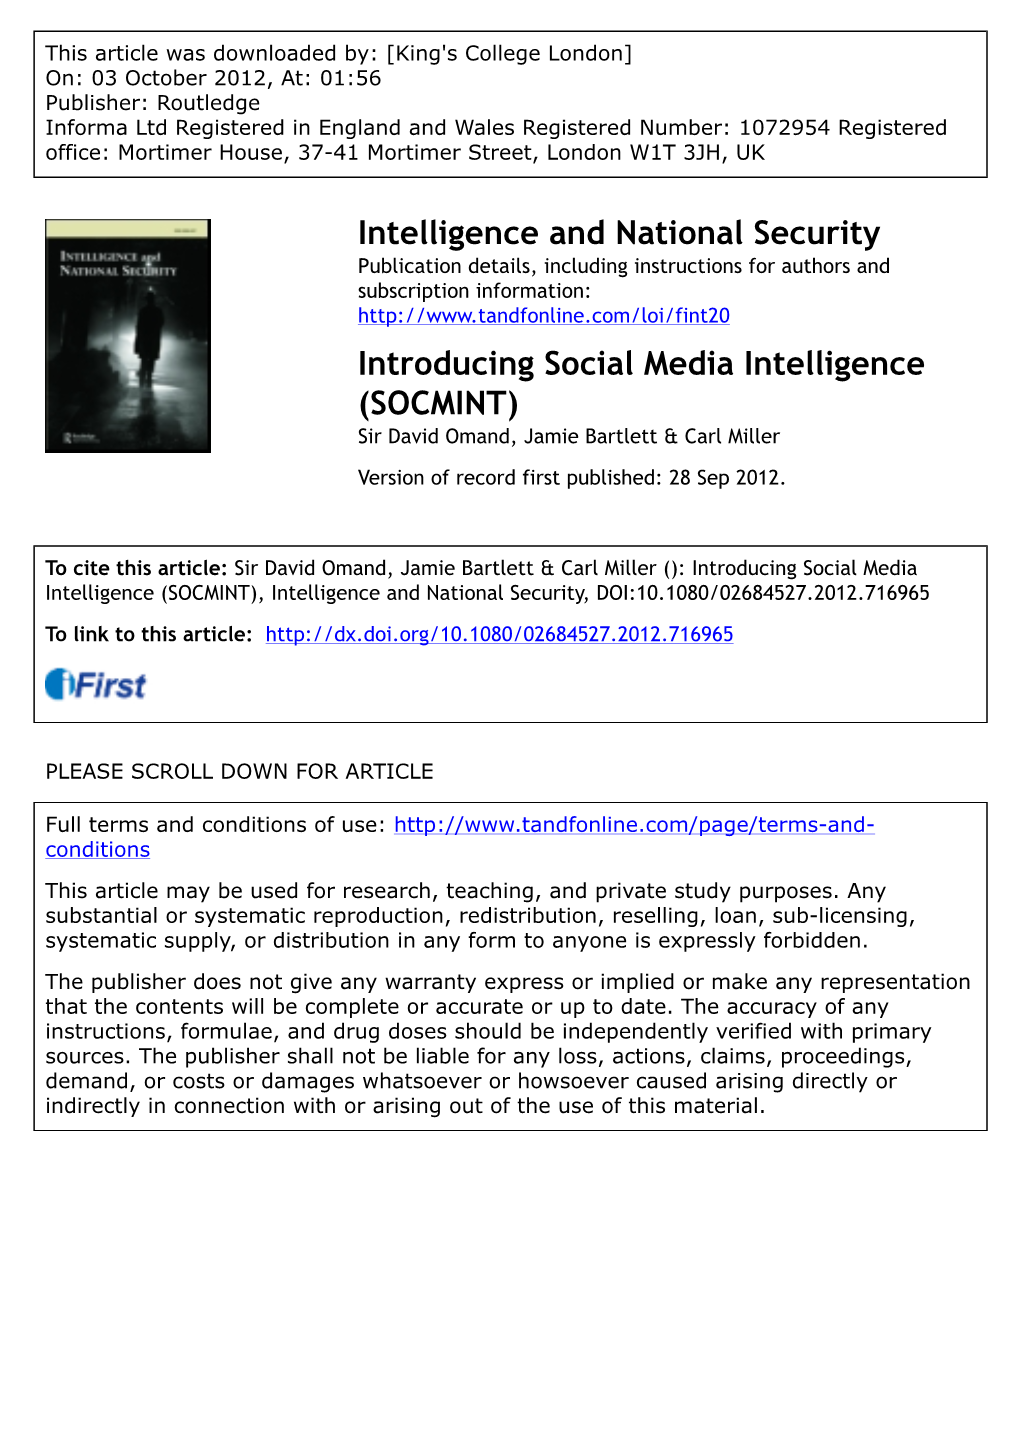 Introducing Social Media Intelligence (SOCMINT) Sir David Omand, Jamie Bartlett & Carl Miller Version of Record First Published: 28 Sep 2012